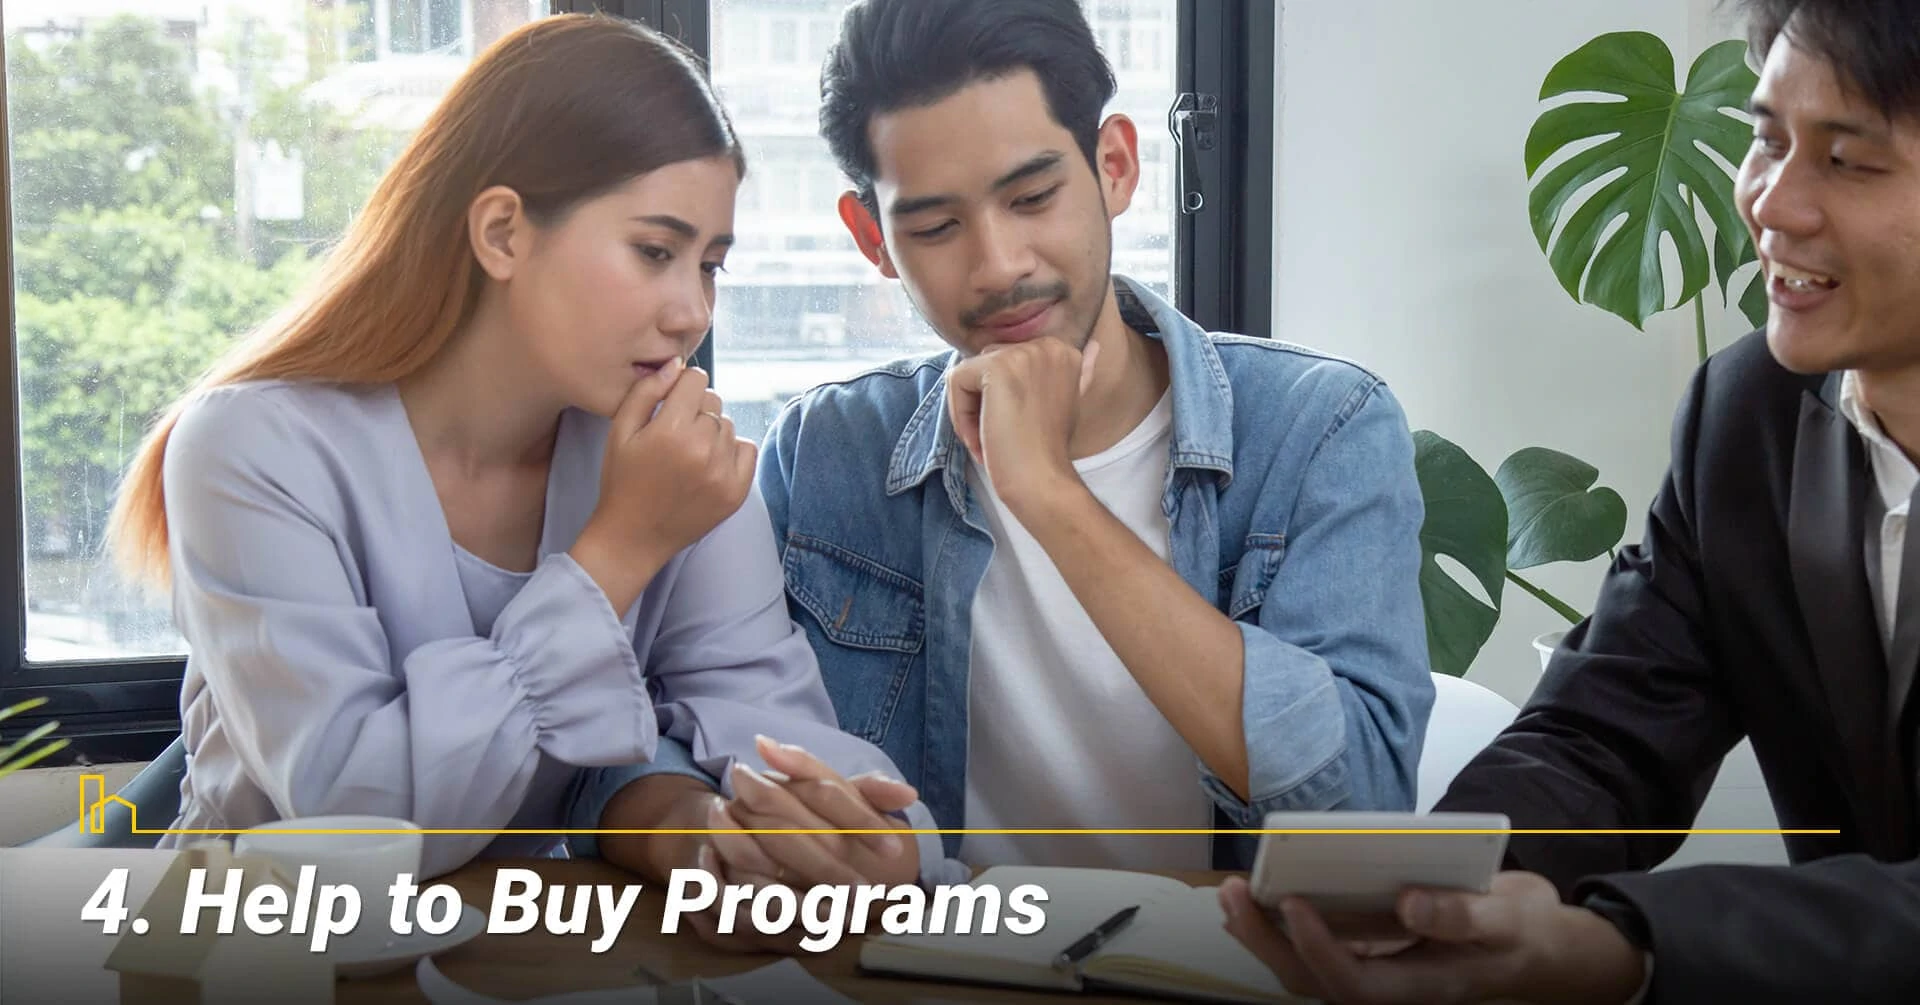 Help to Buy Programs, home buyer assistant